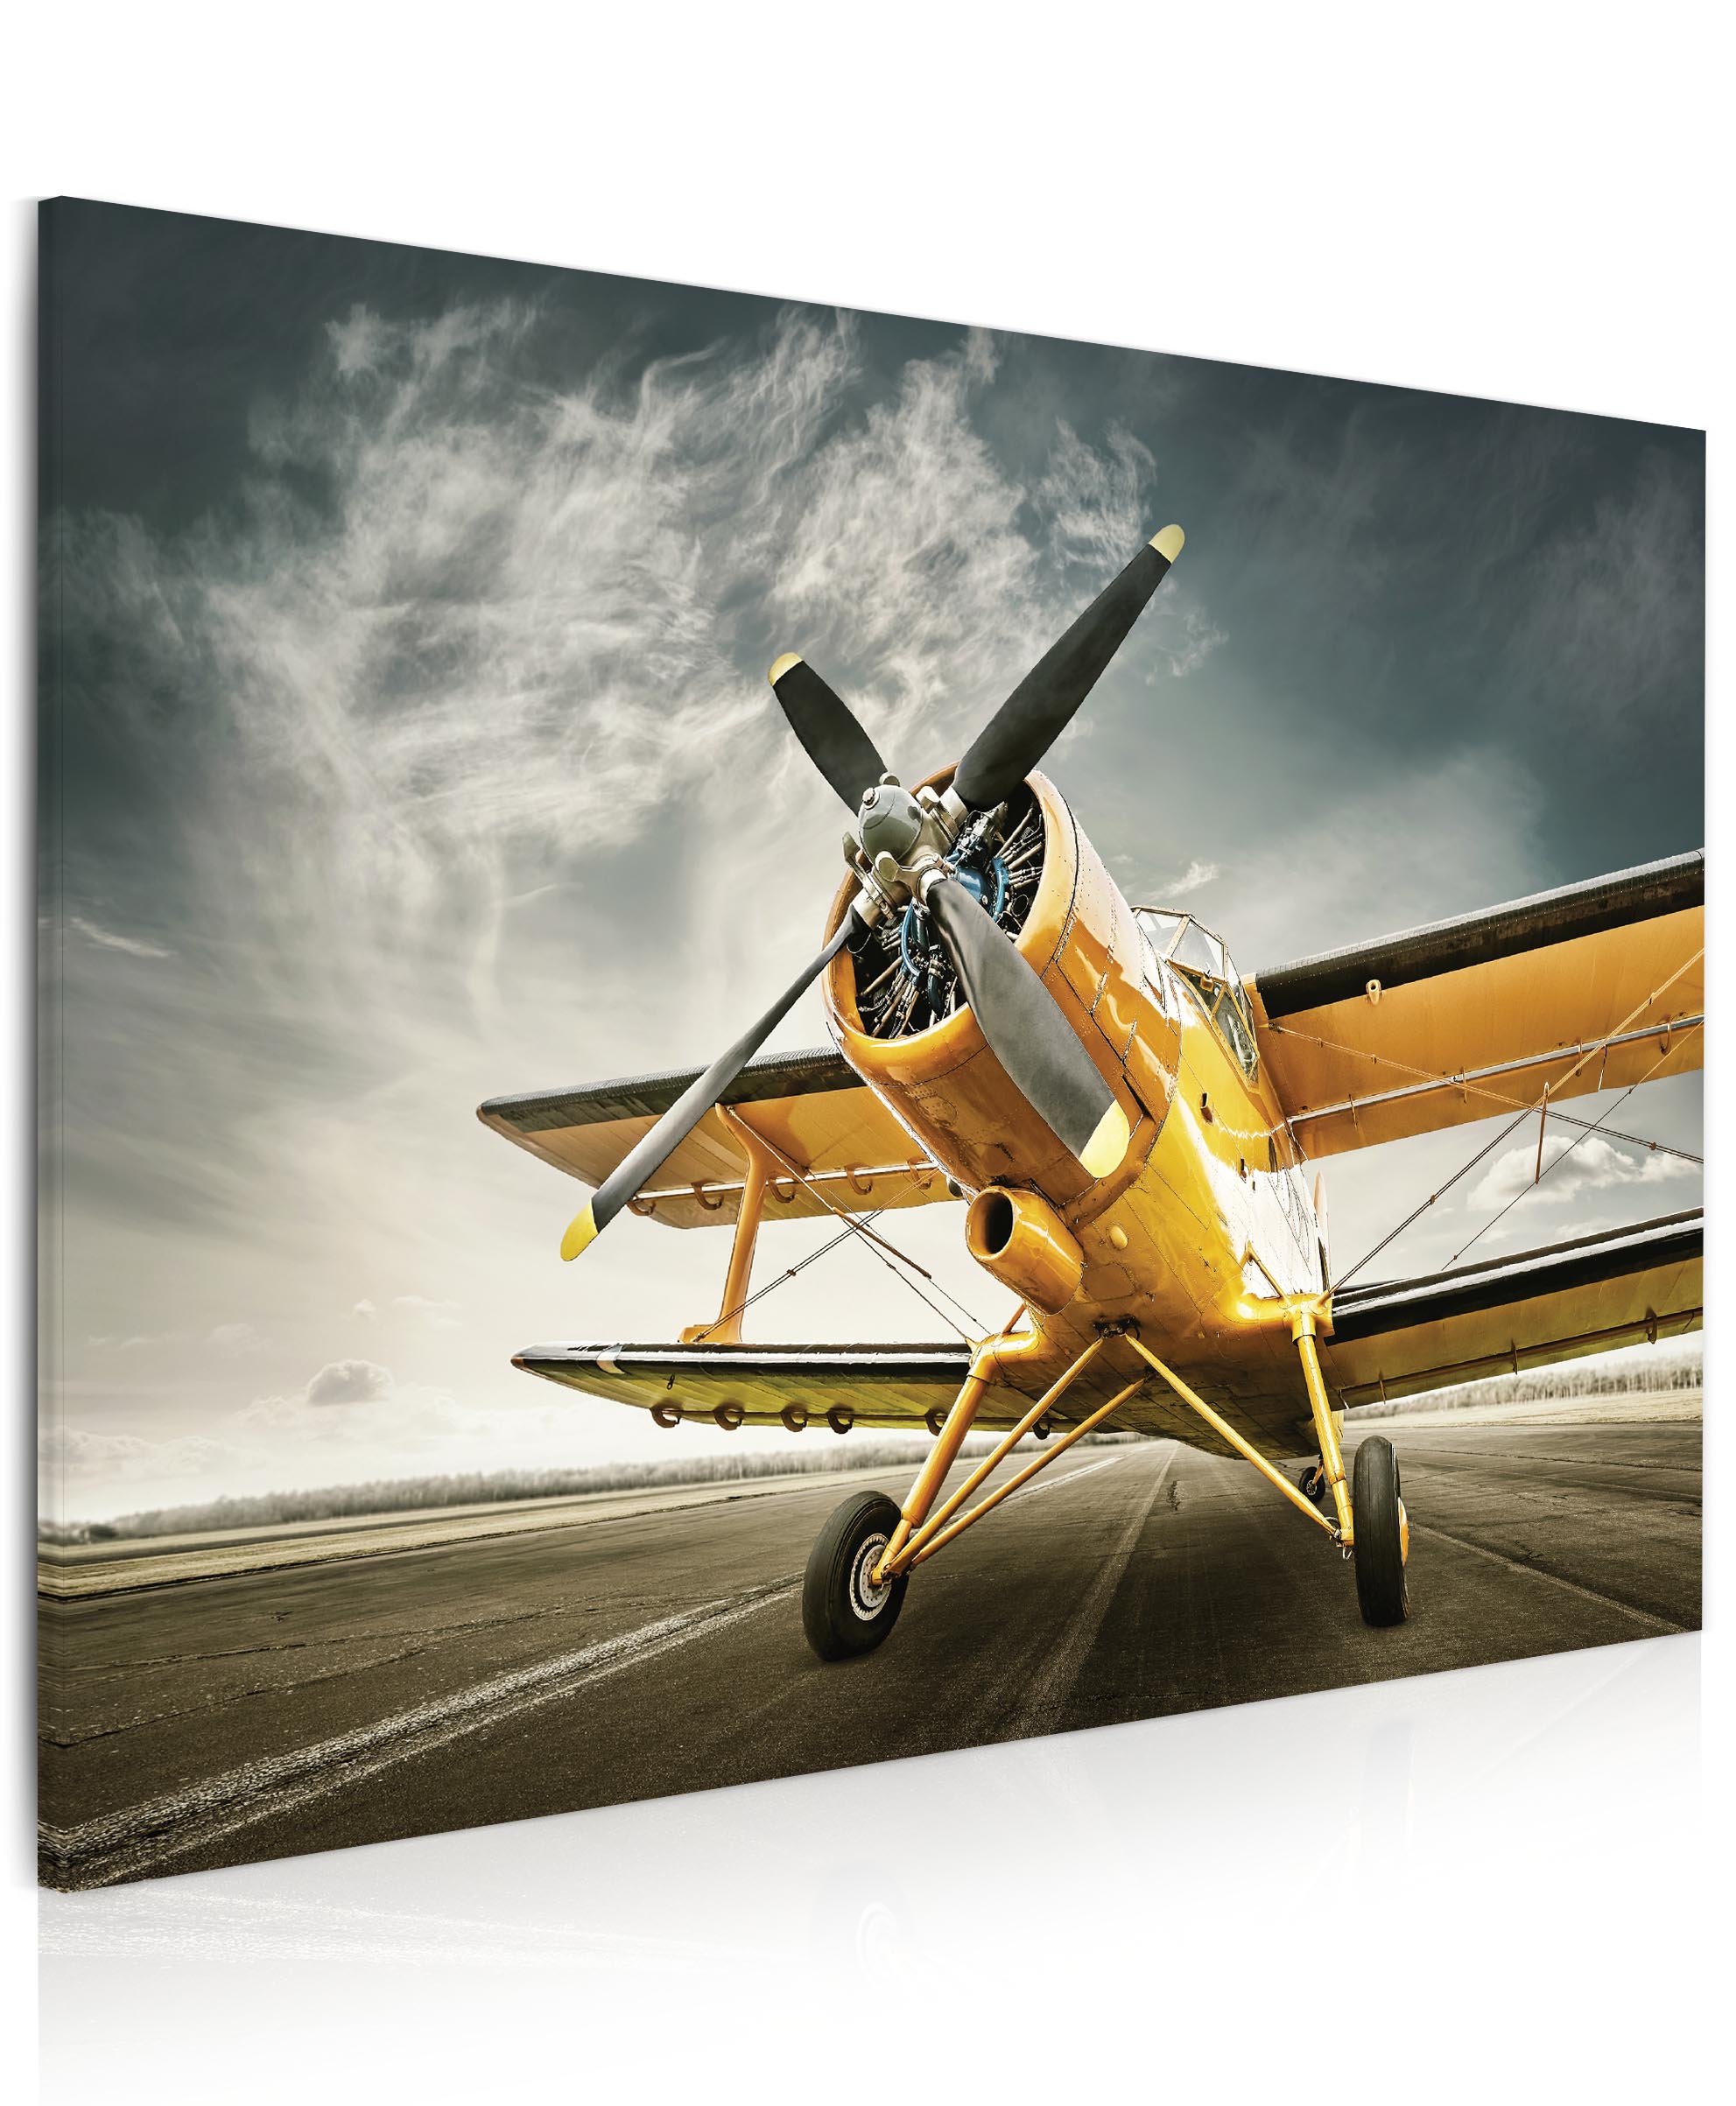 Obraz Žluté letadlo Velikost (šířka x výška): 150x100 cm